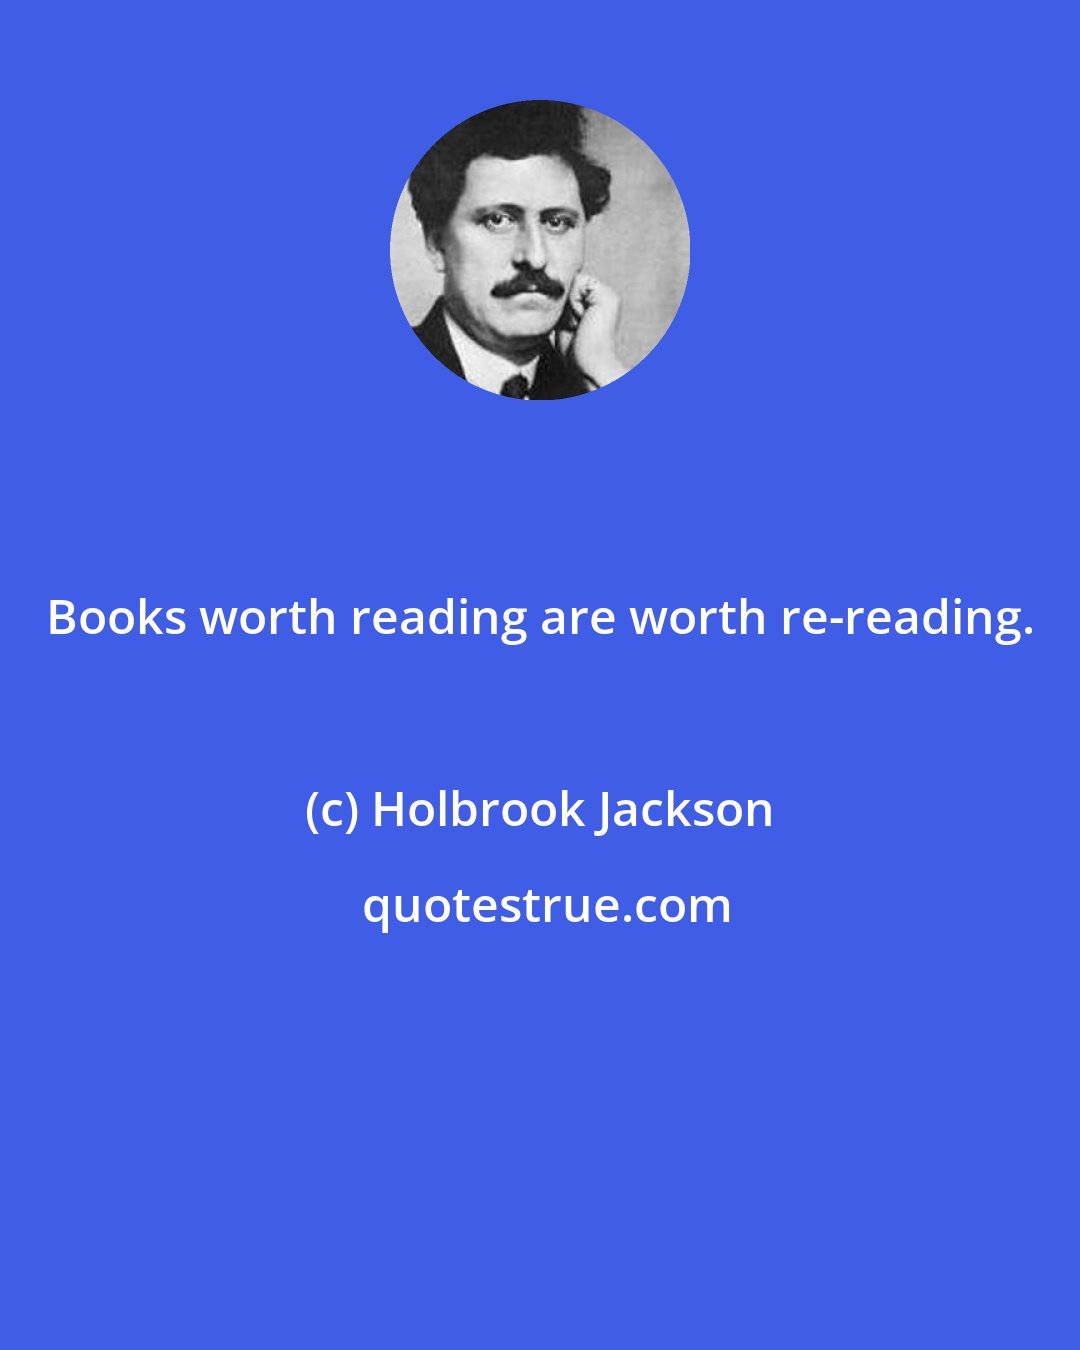 Holbrook Jackson: Books worth reading are worth re-reading.